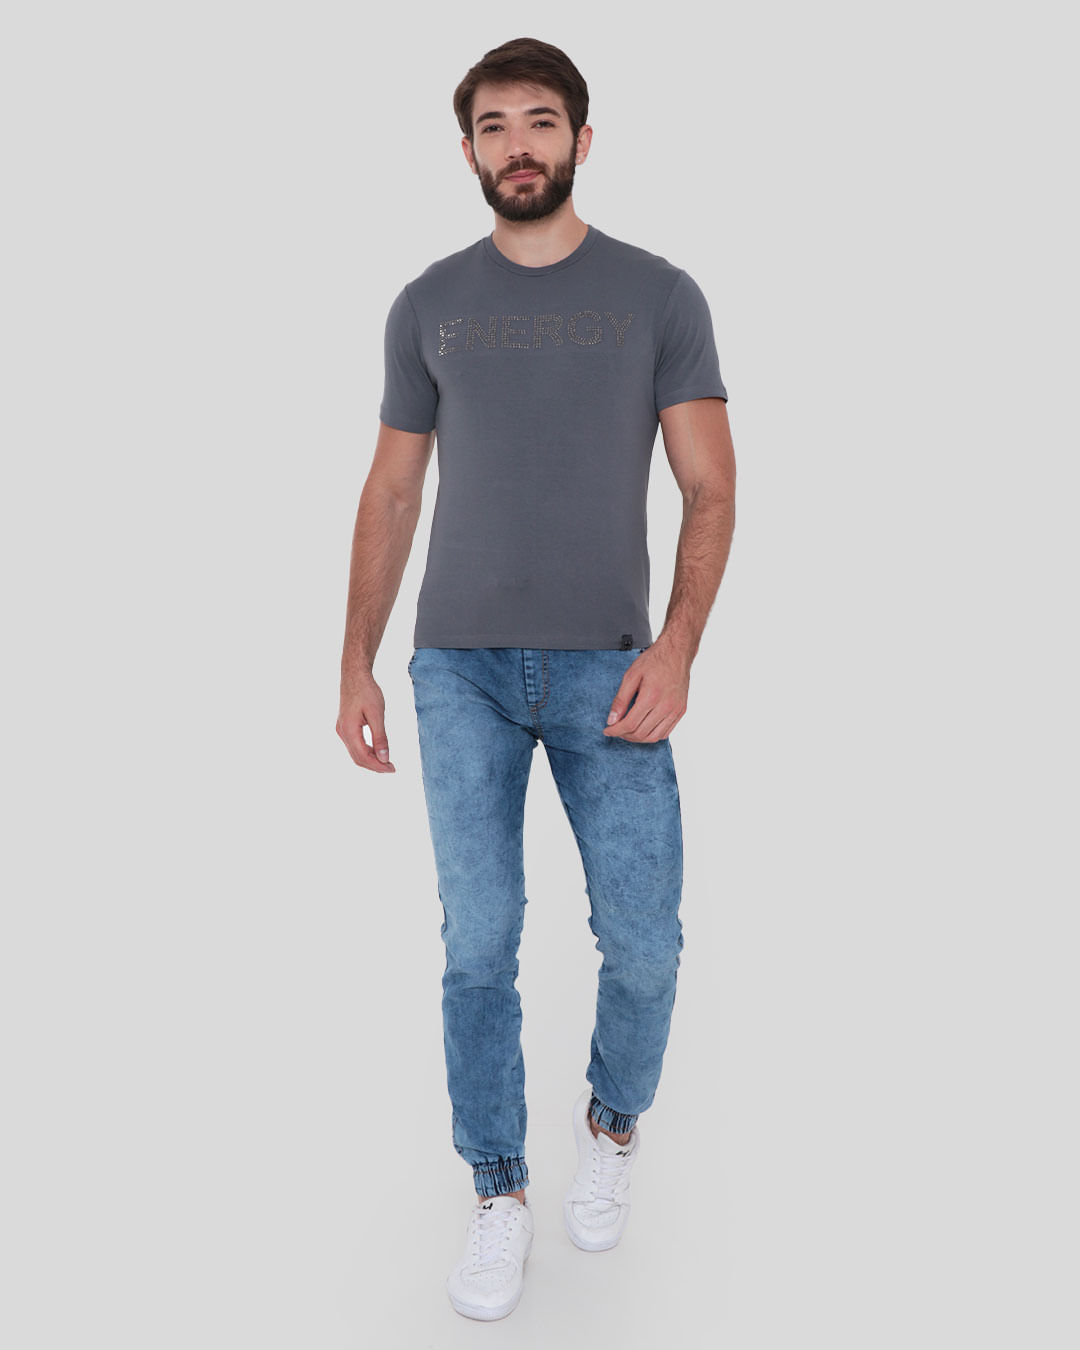 Calça banks jogger jeans claro - LOKAL SKATE SHOP